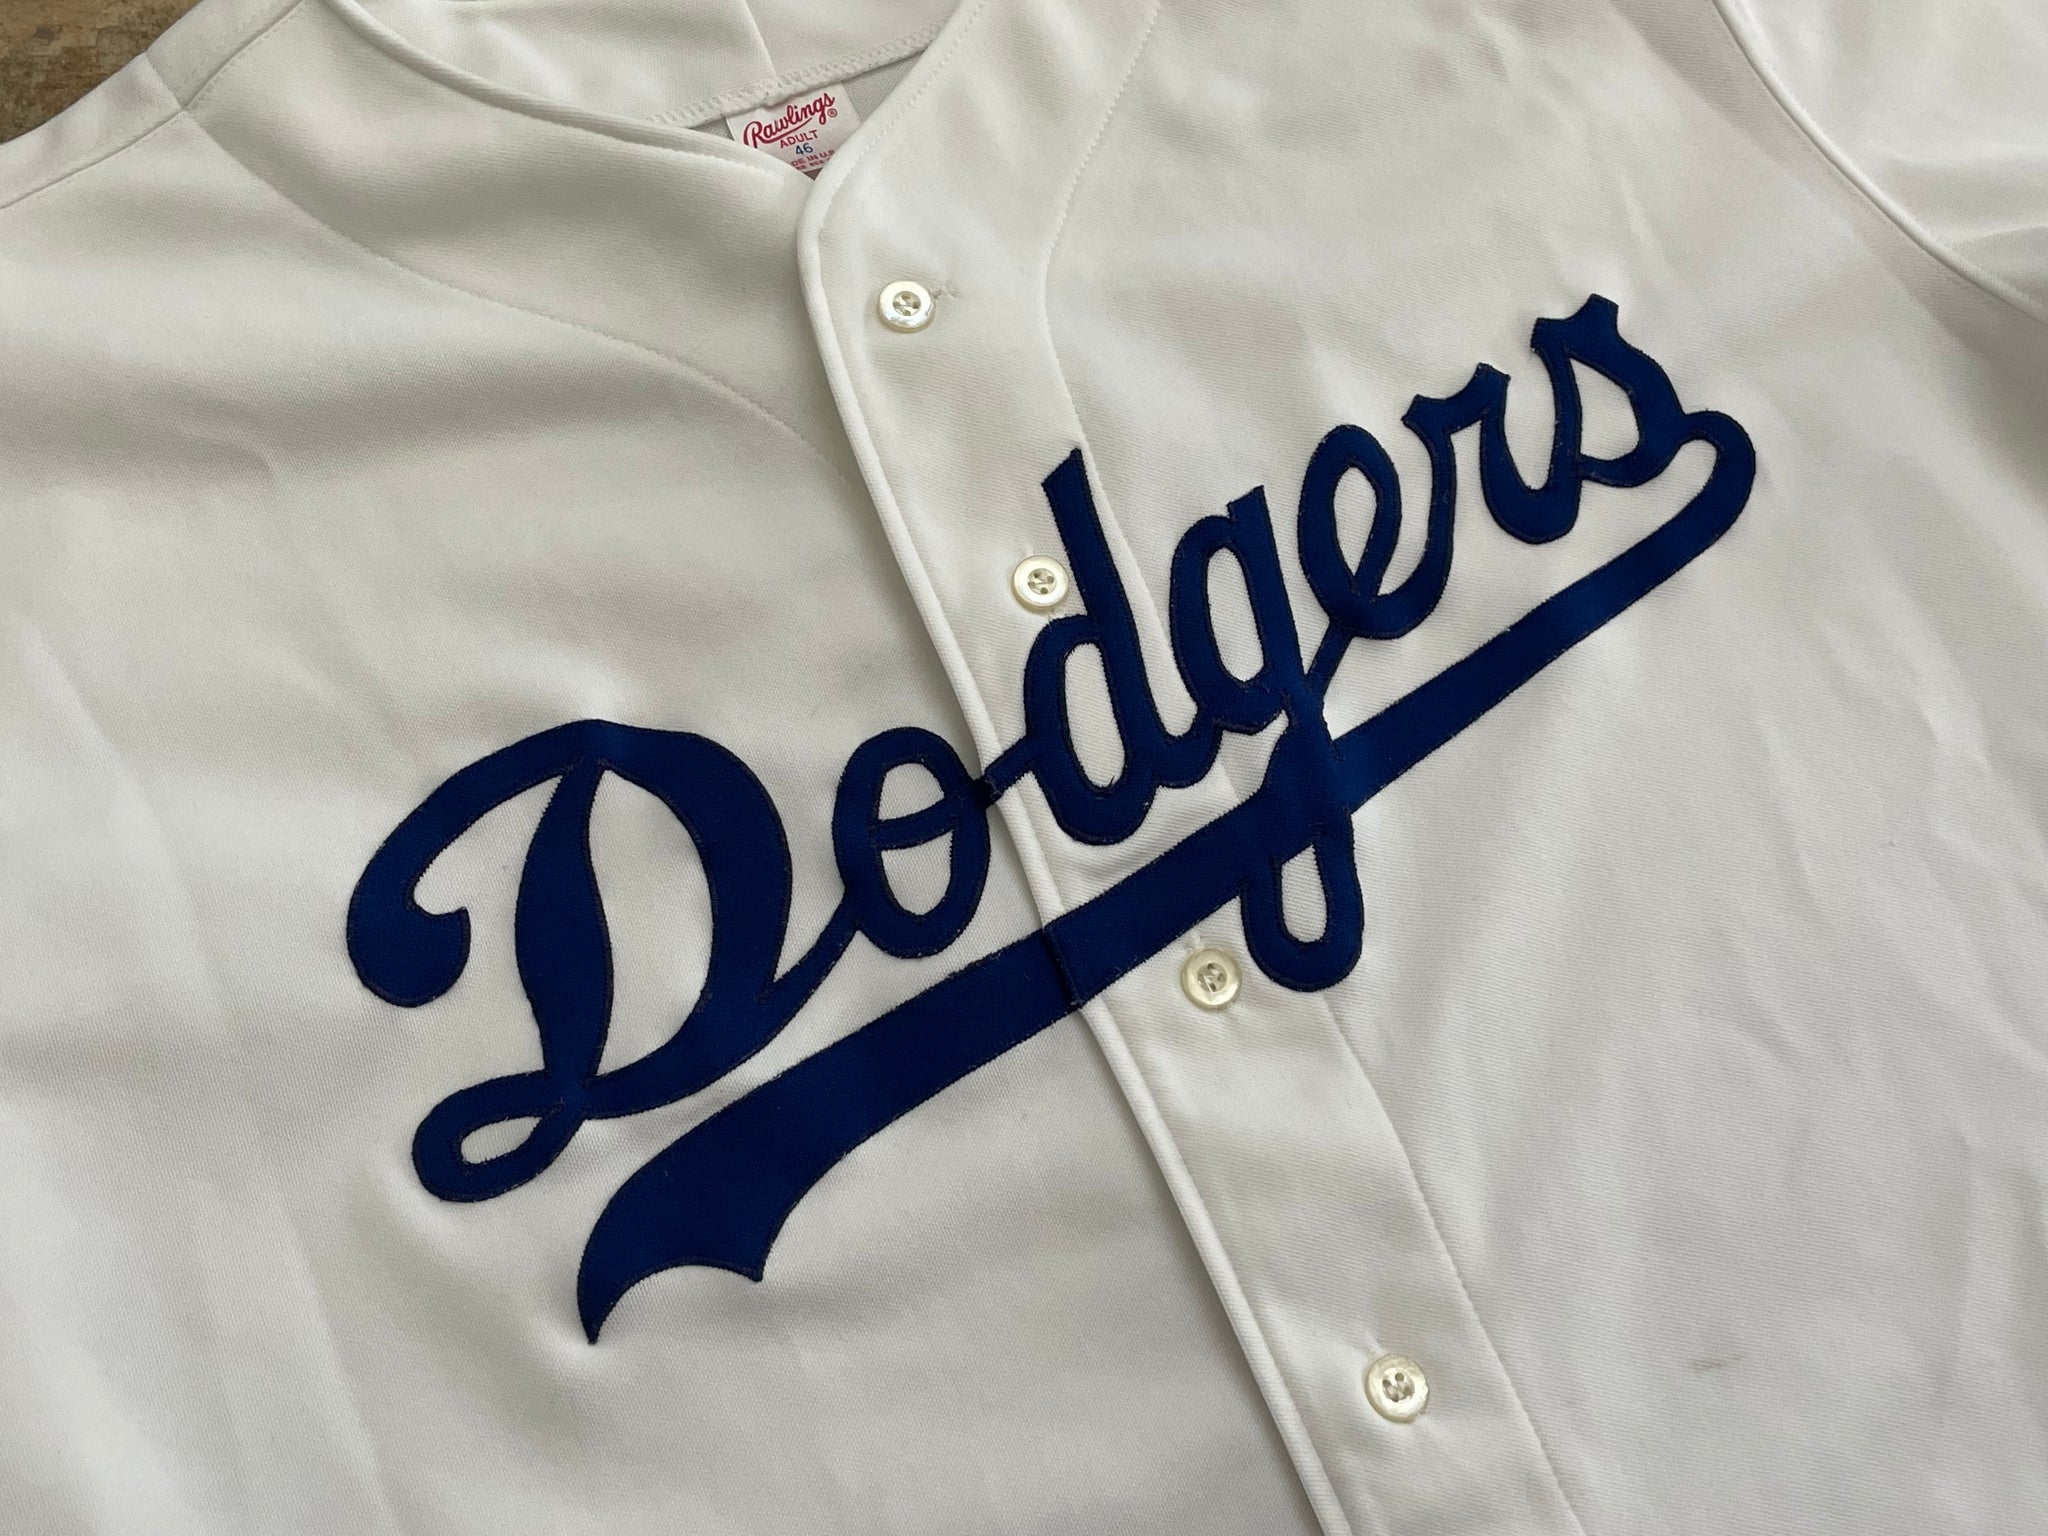 Los Angeles Dodgers Throwback Apparel & Jerseys